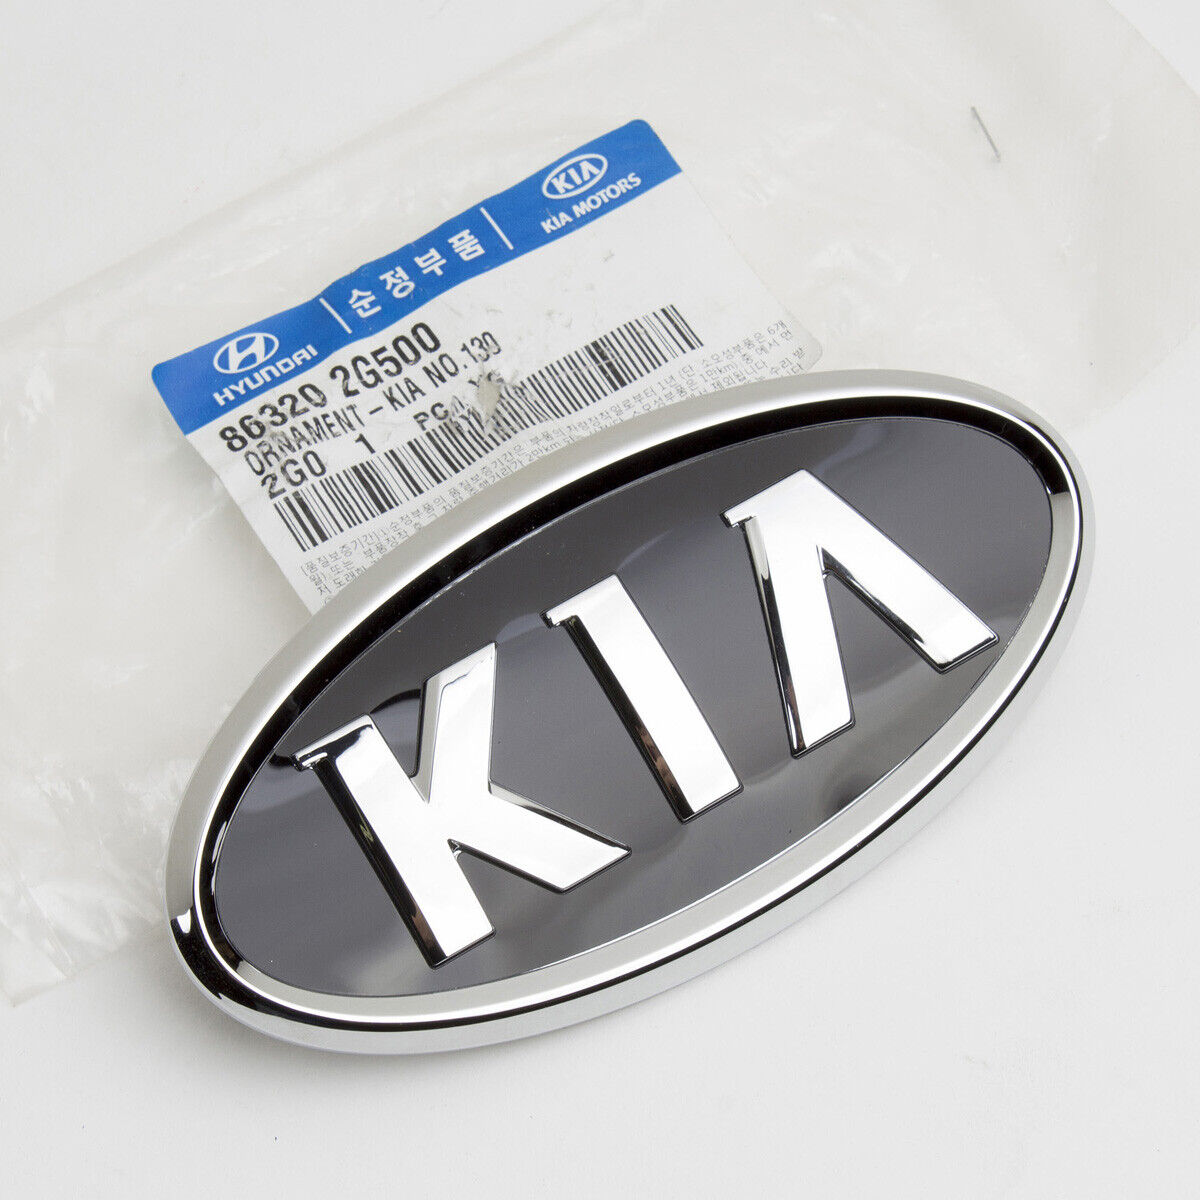 Genuine 2006-08 Optima Grille Emblem 86320 2G500 (130mm) for Hyundai Kia